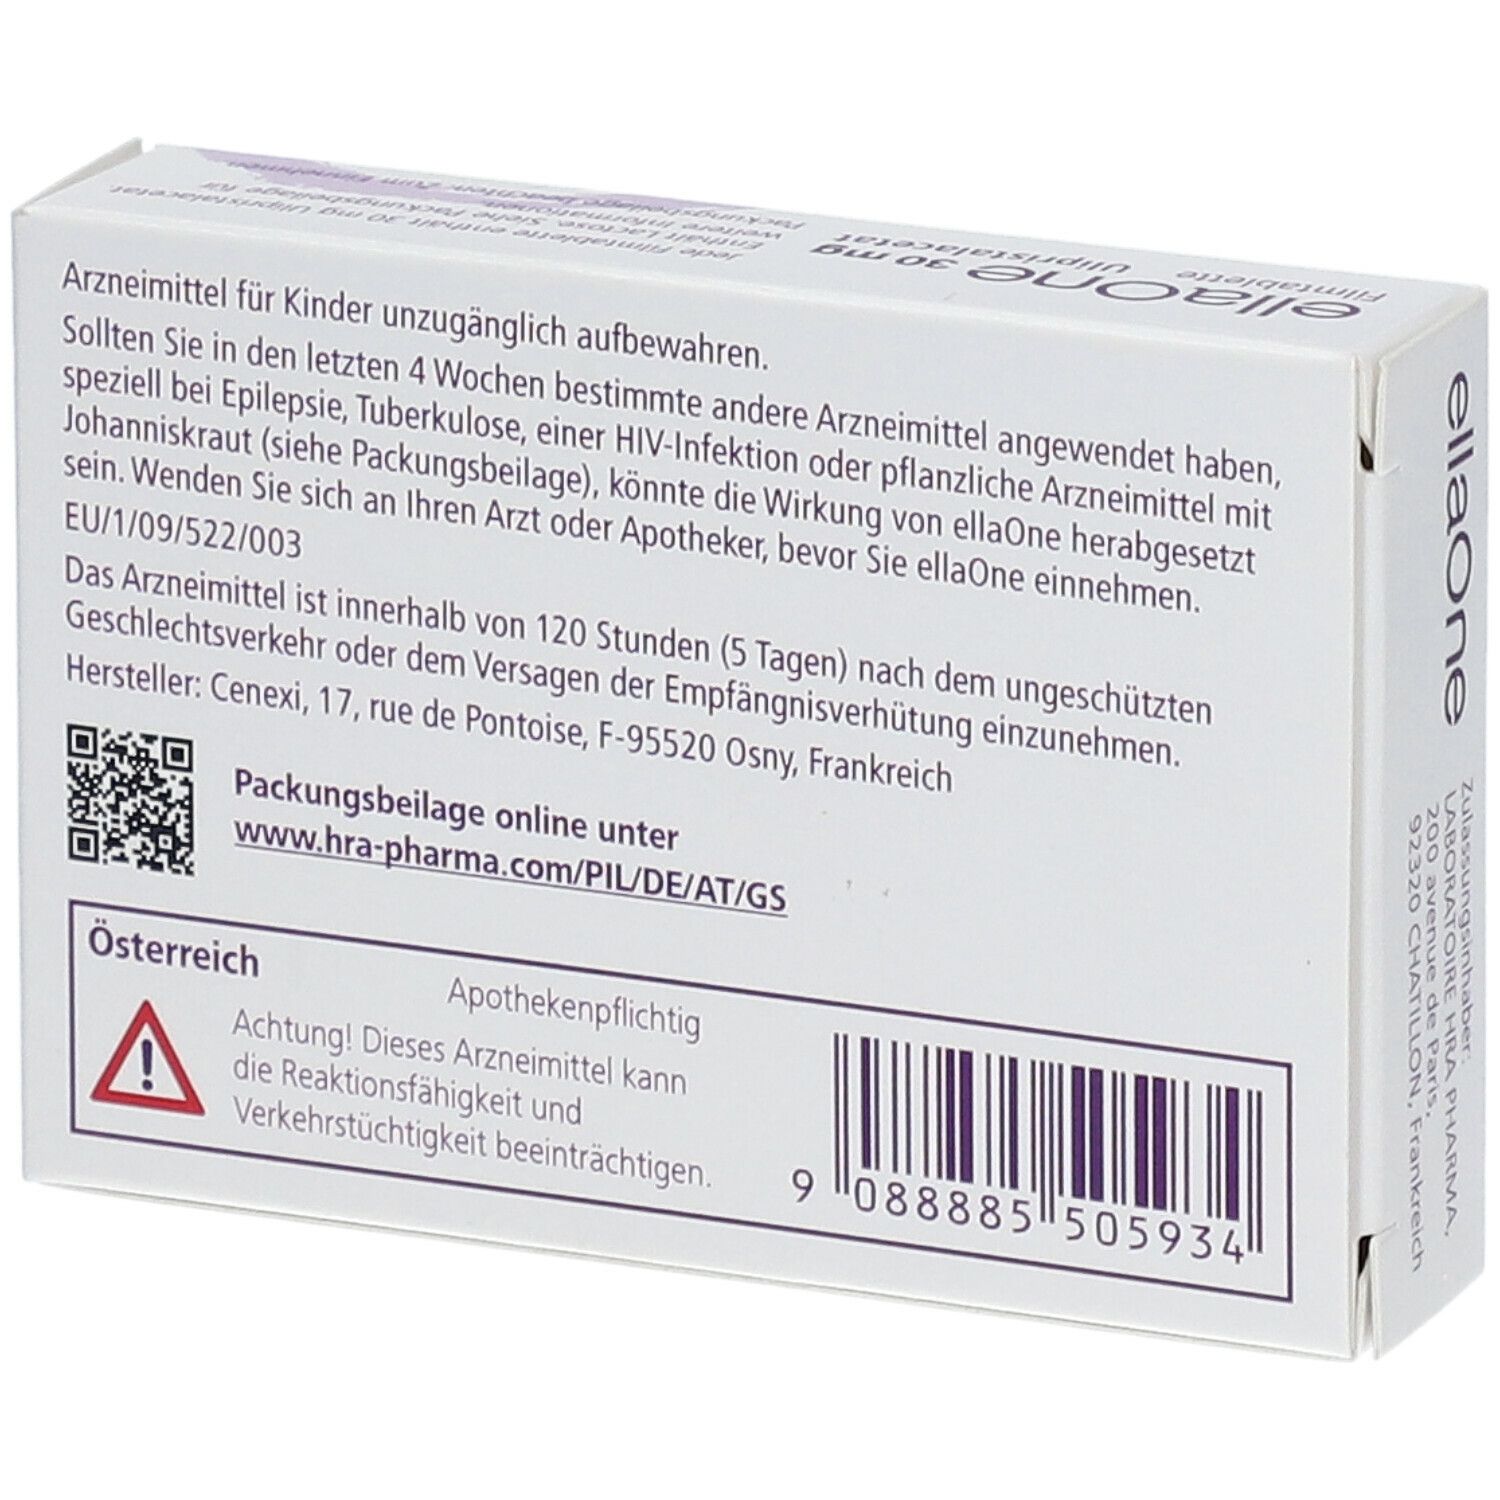 ellaOne® 30 mg Notfallverhütung